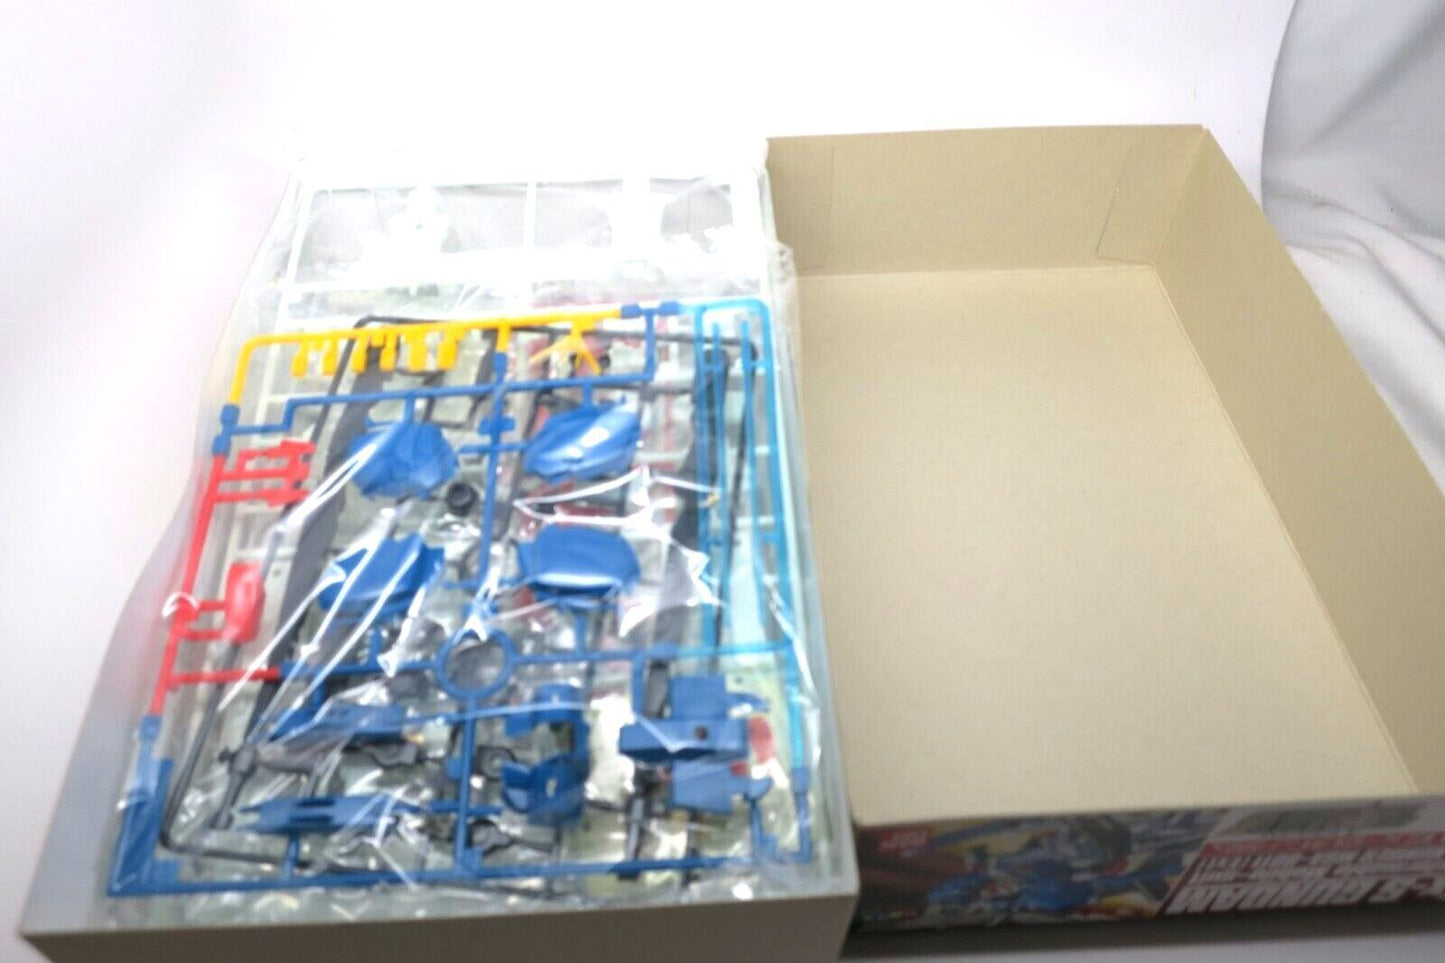 BANDAI 1/144 Gundam Sentinel EX-S Gundam  Model Kit 0025052 B3